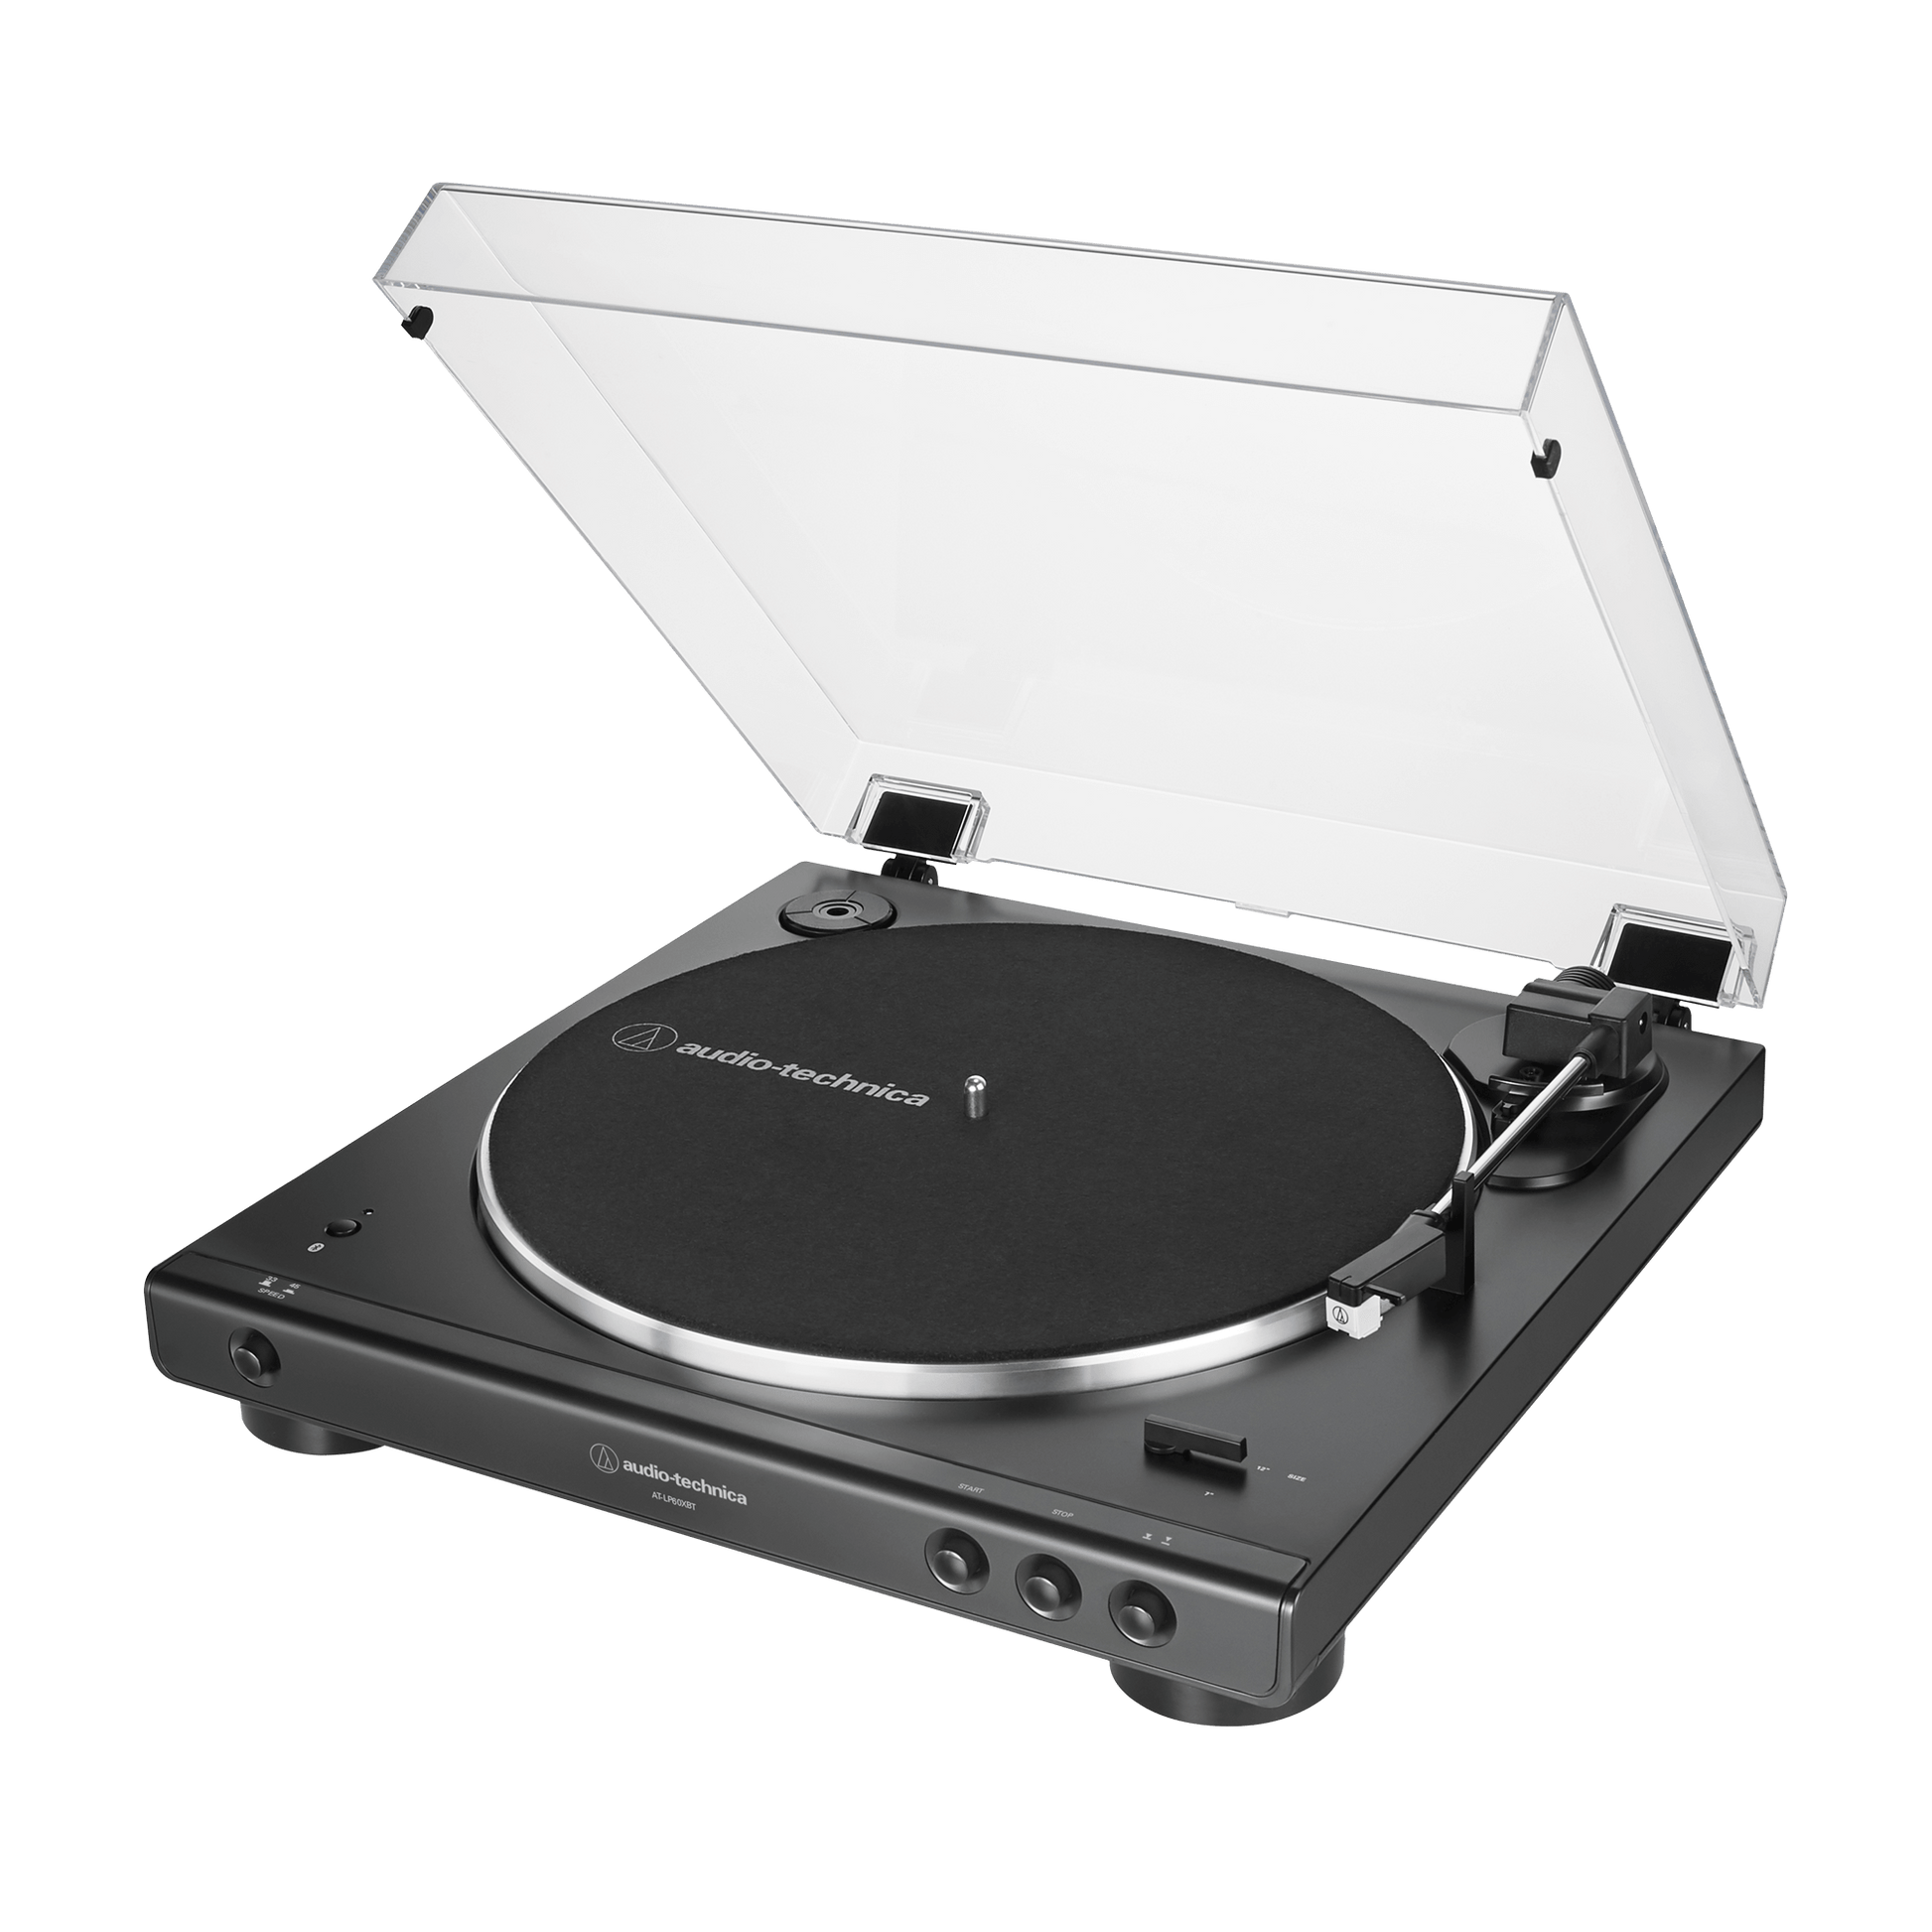 AT-LP60XBTBK-Turntables & Record Players-Audio-Technica-PremiumHIFI